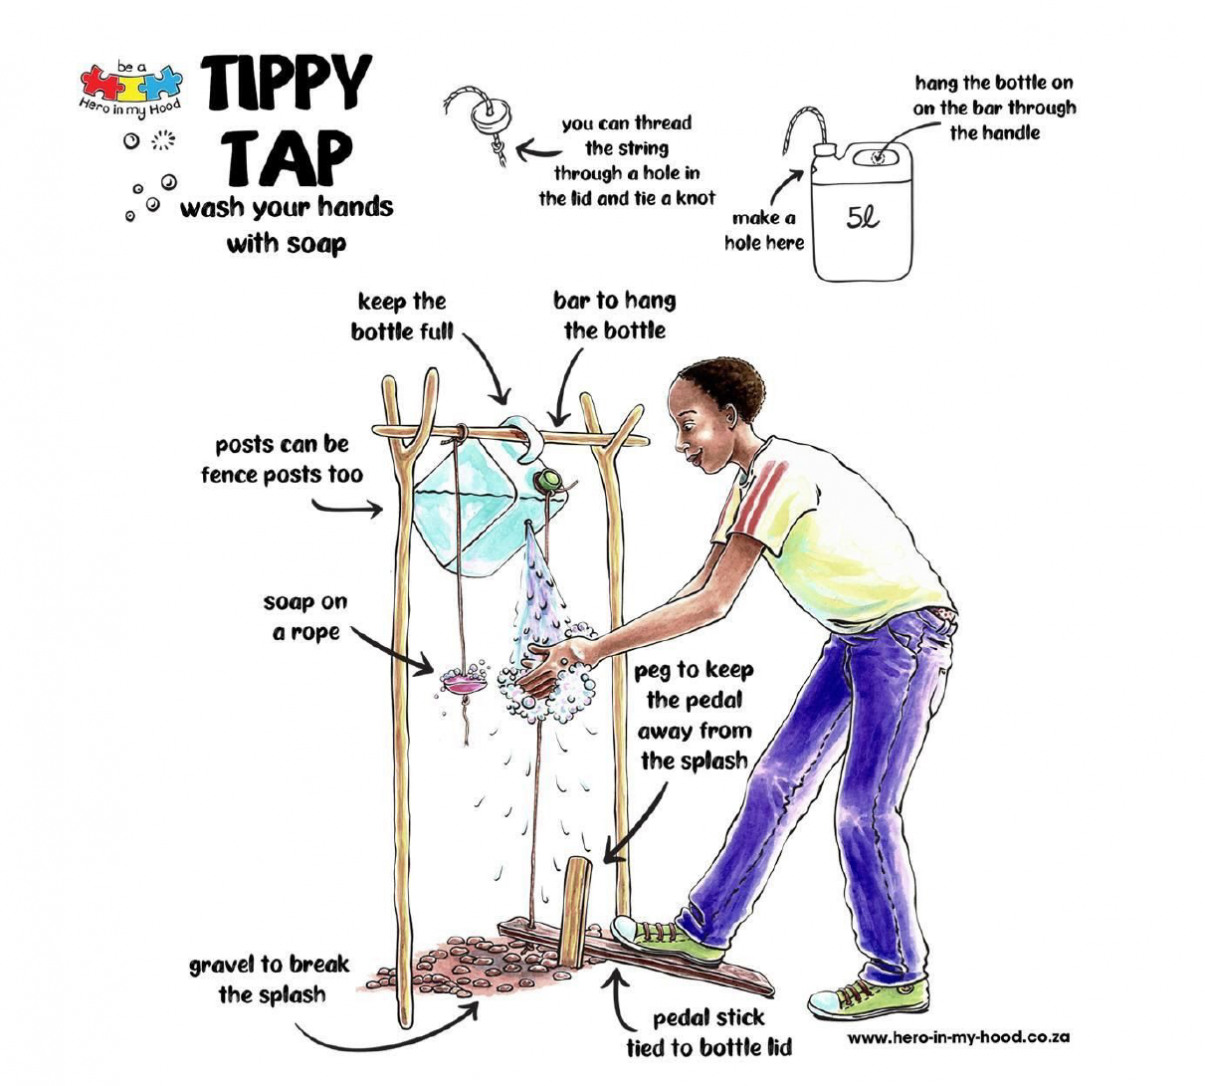 tippy tap